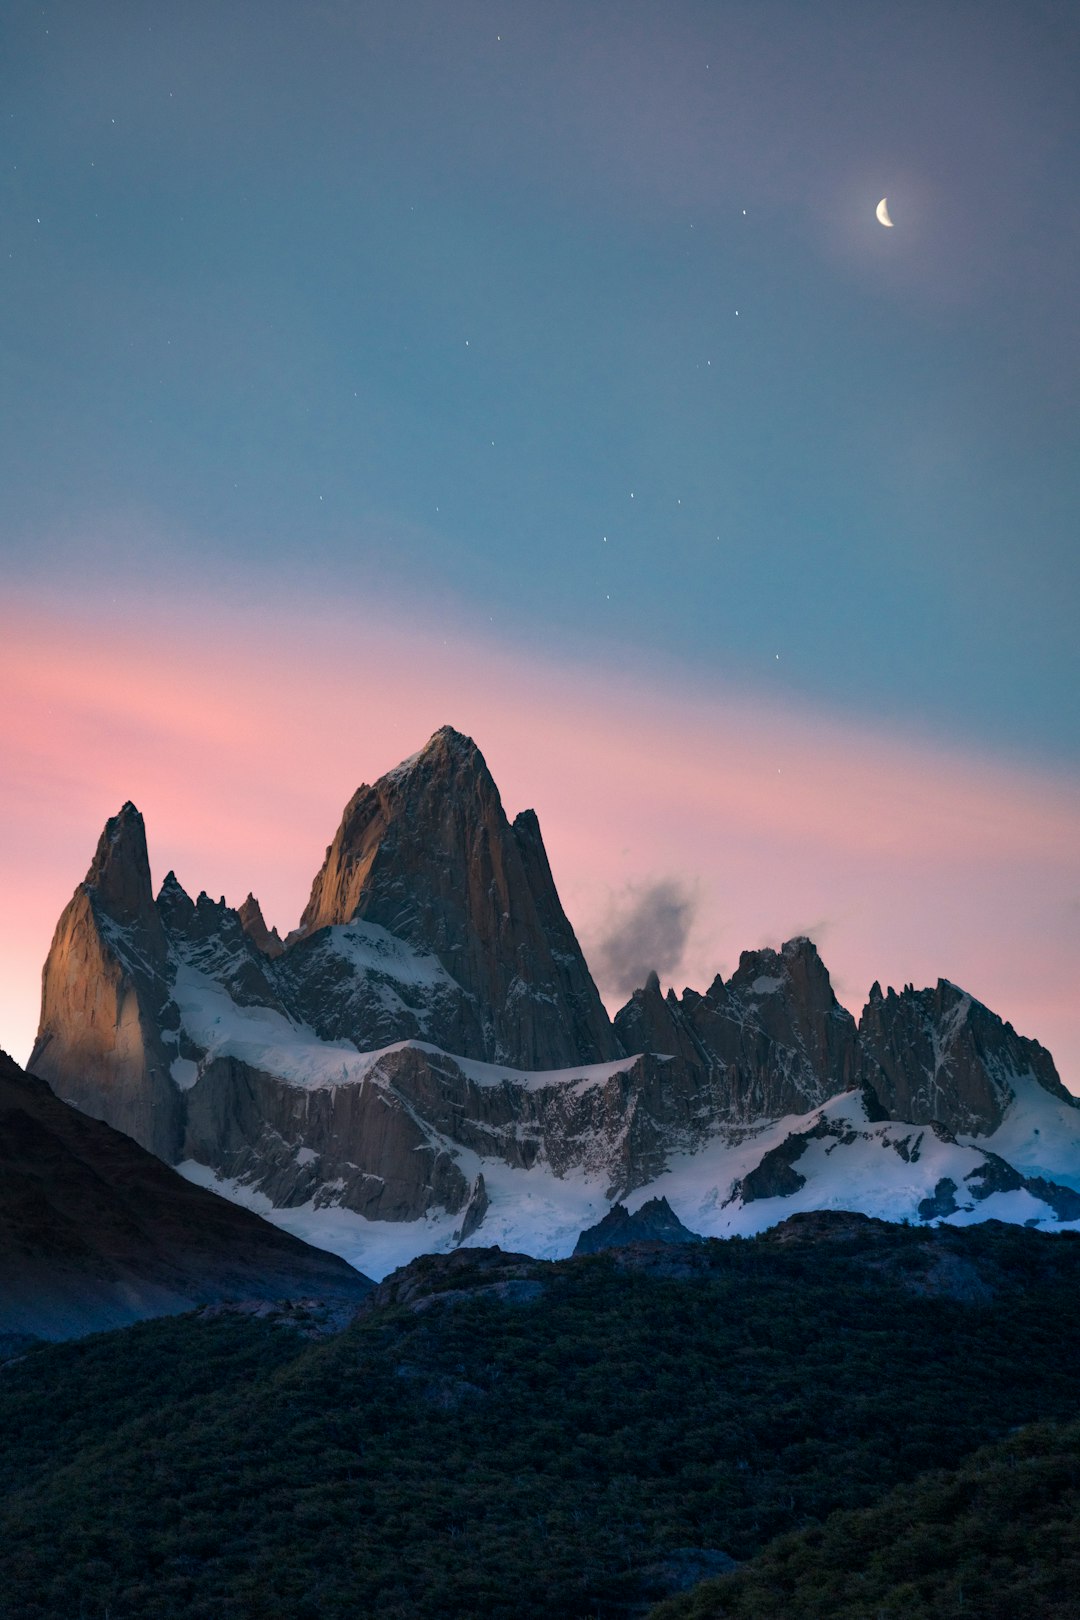 Patagonia Travel Guide